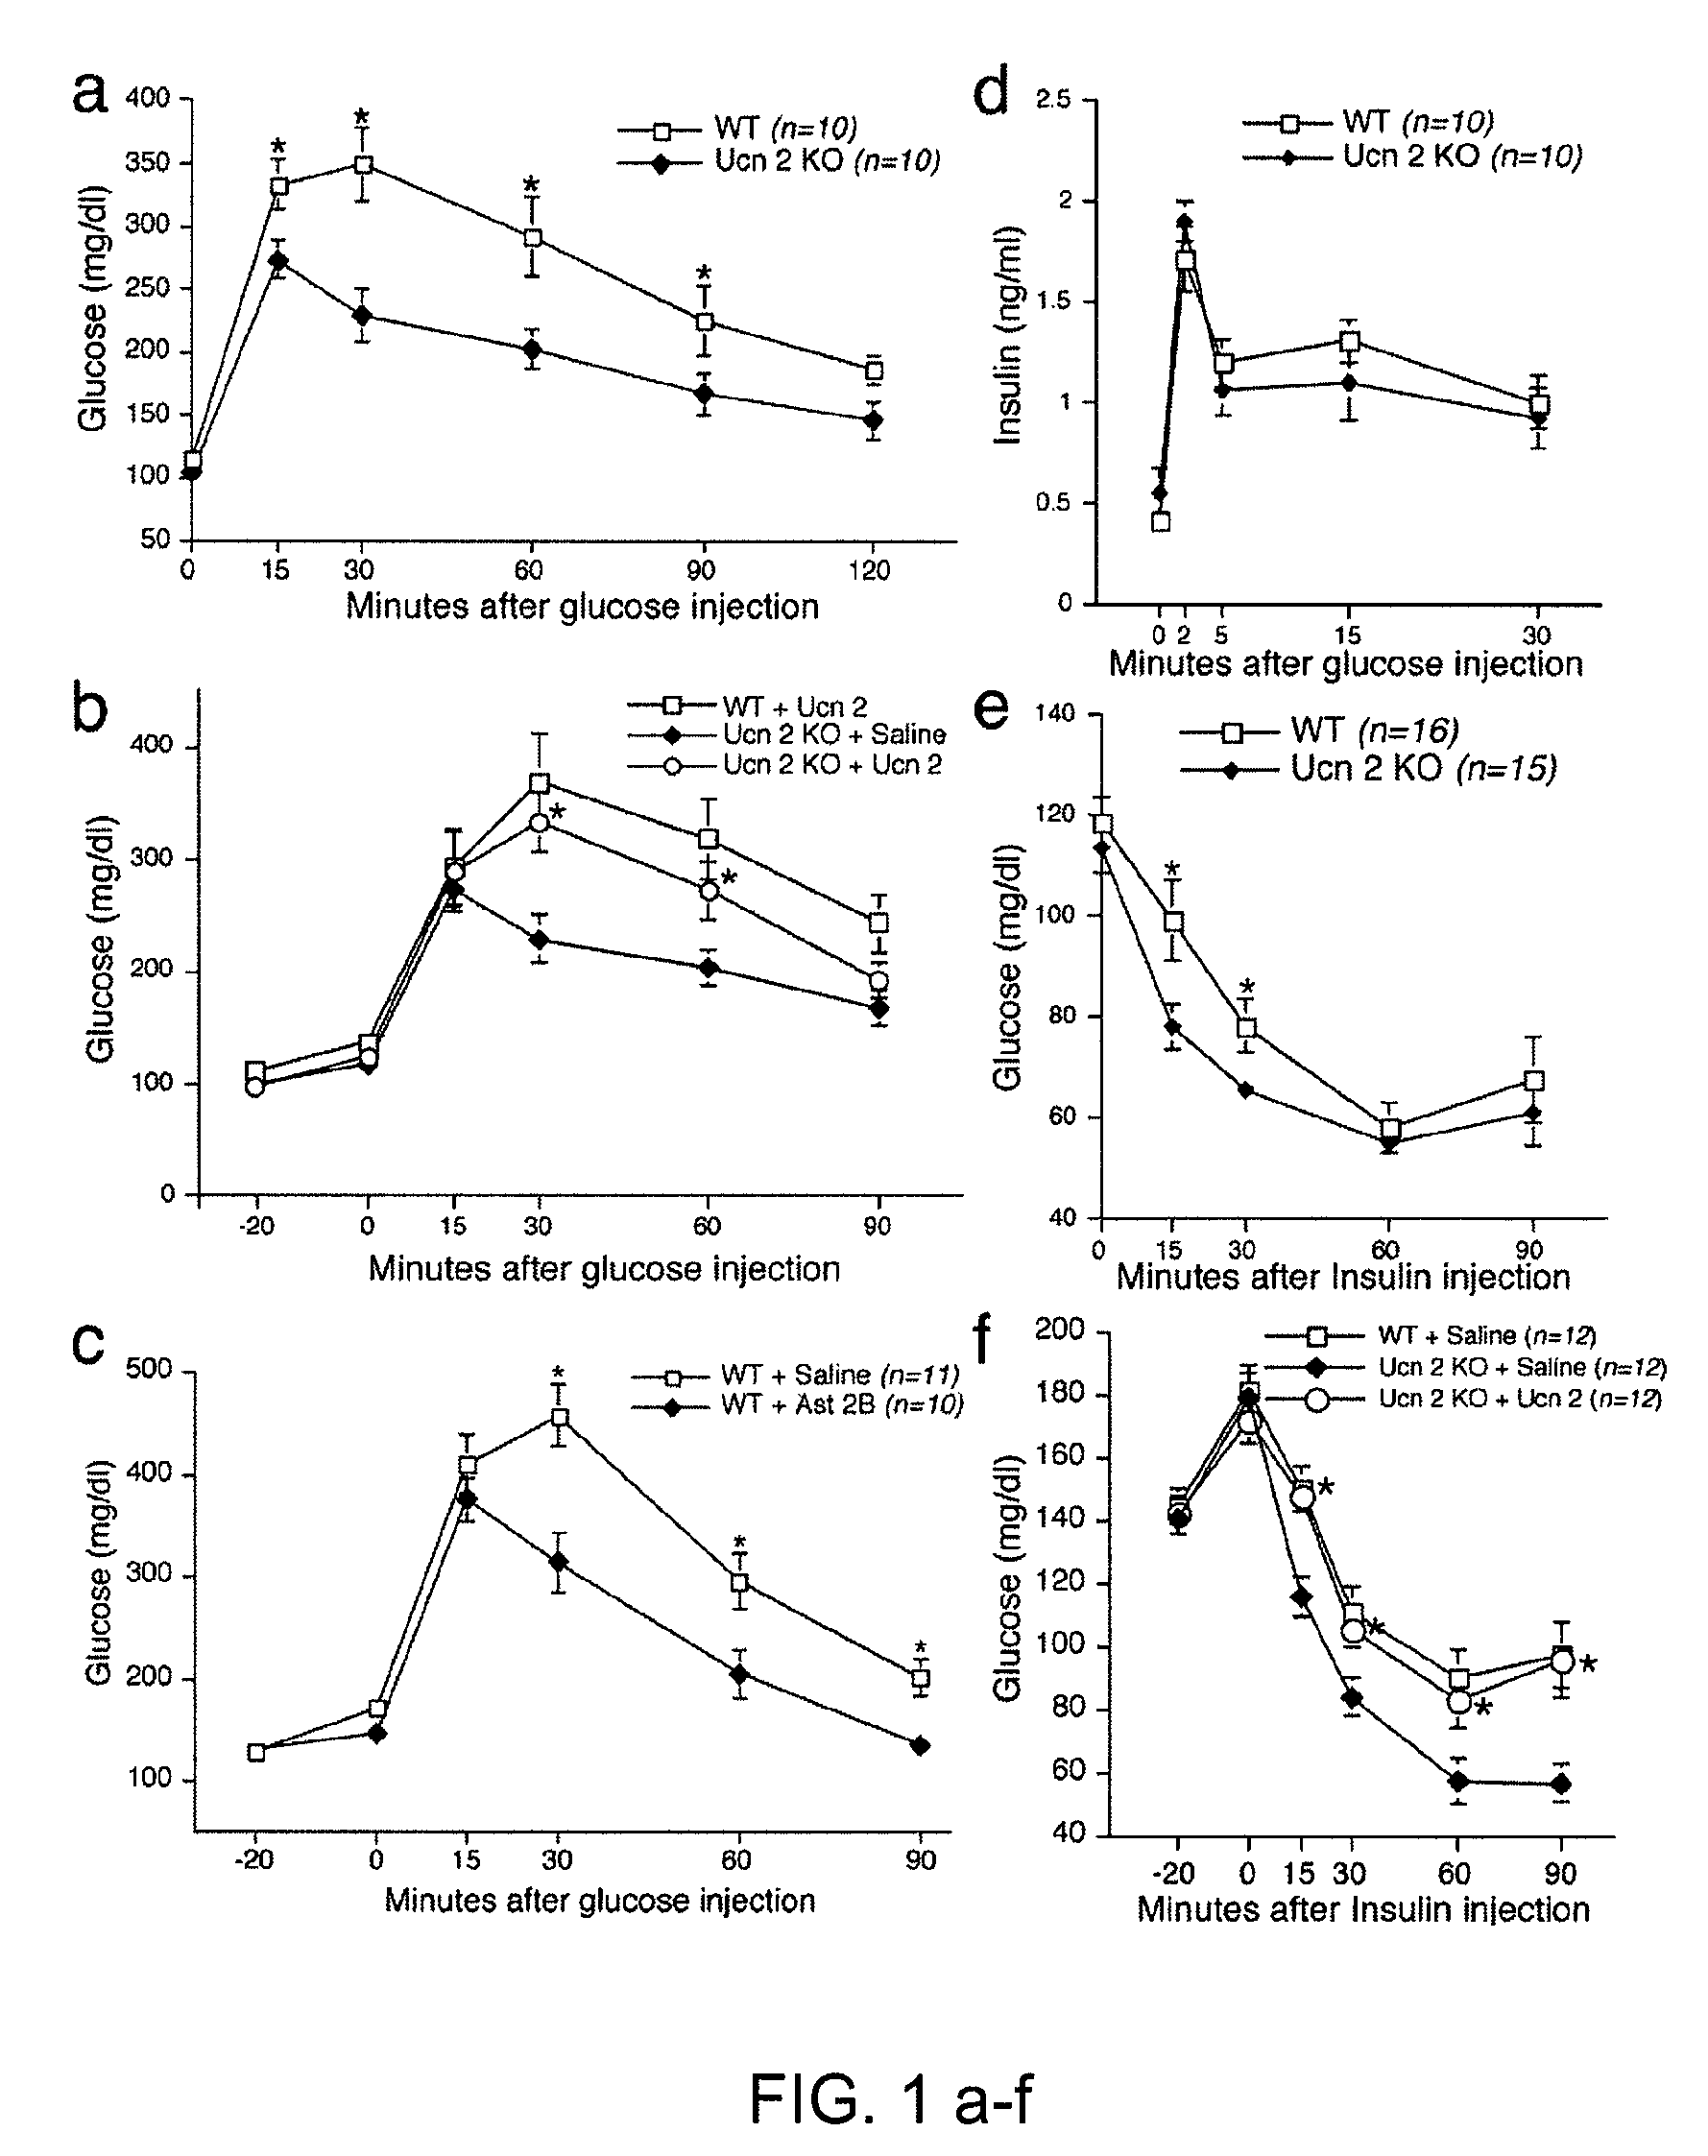 Methods of increasing insulin sensitivity or decreasing insulin secretion by administering corticotropin releasing factor receptor-2 inhibitors